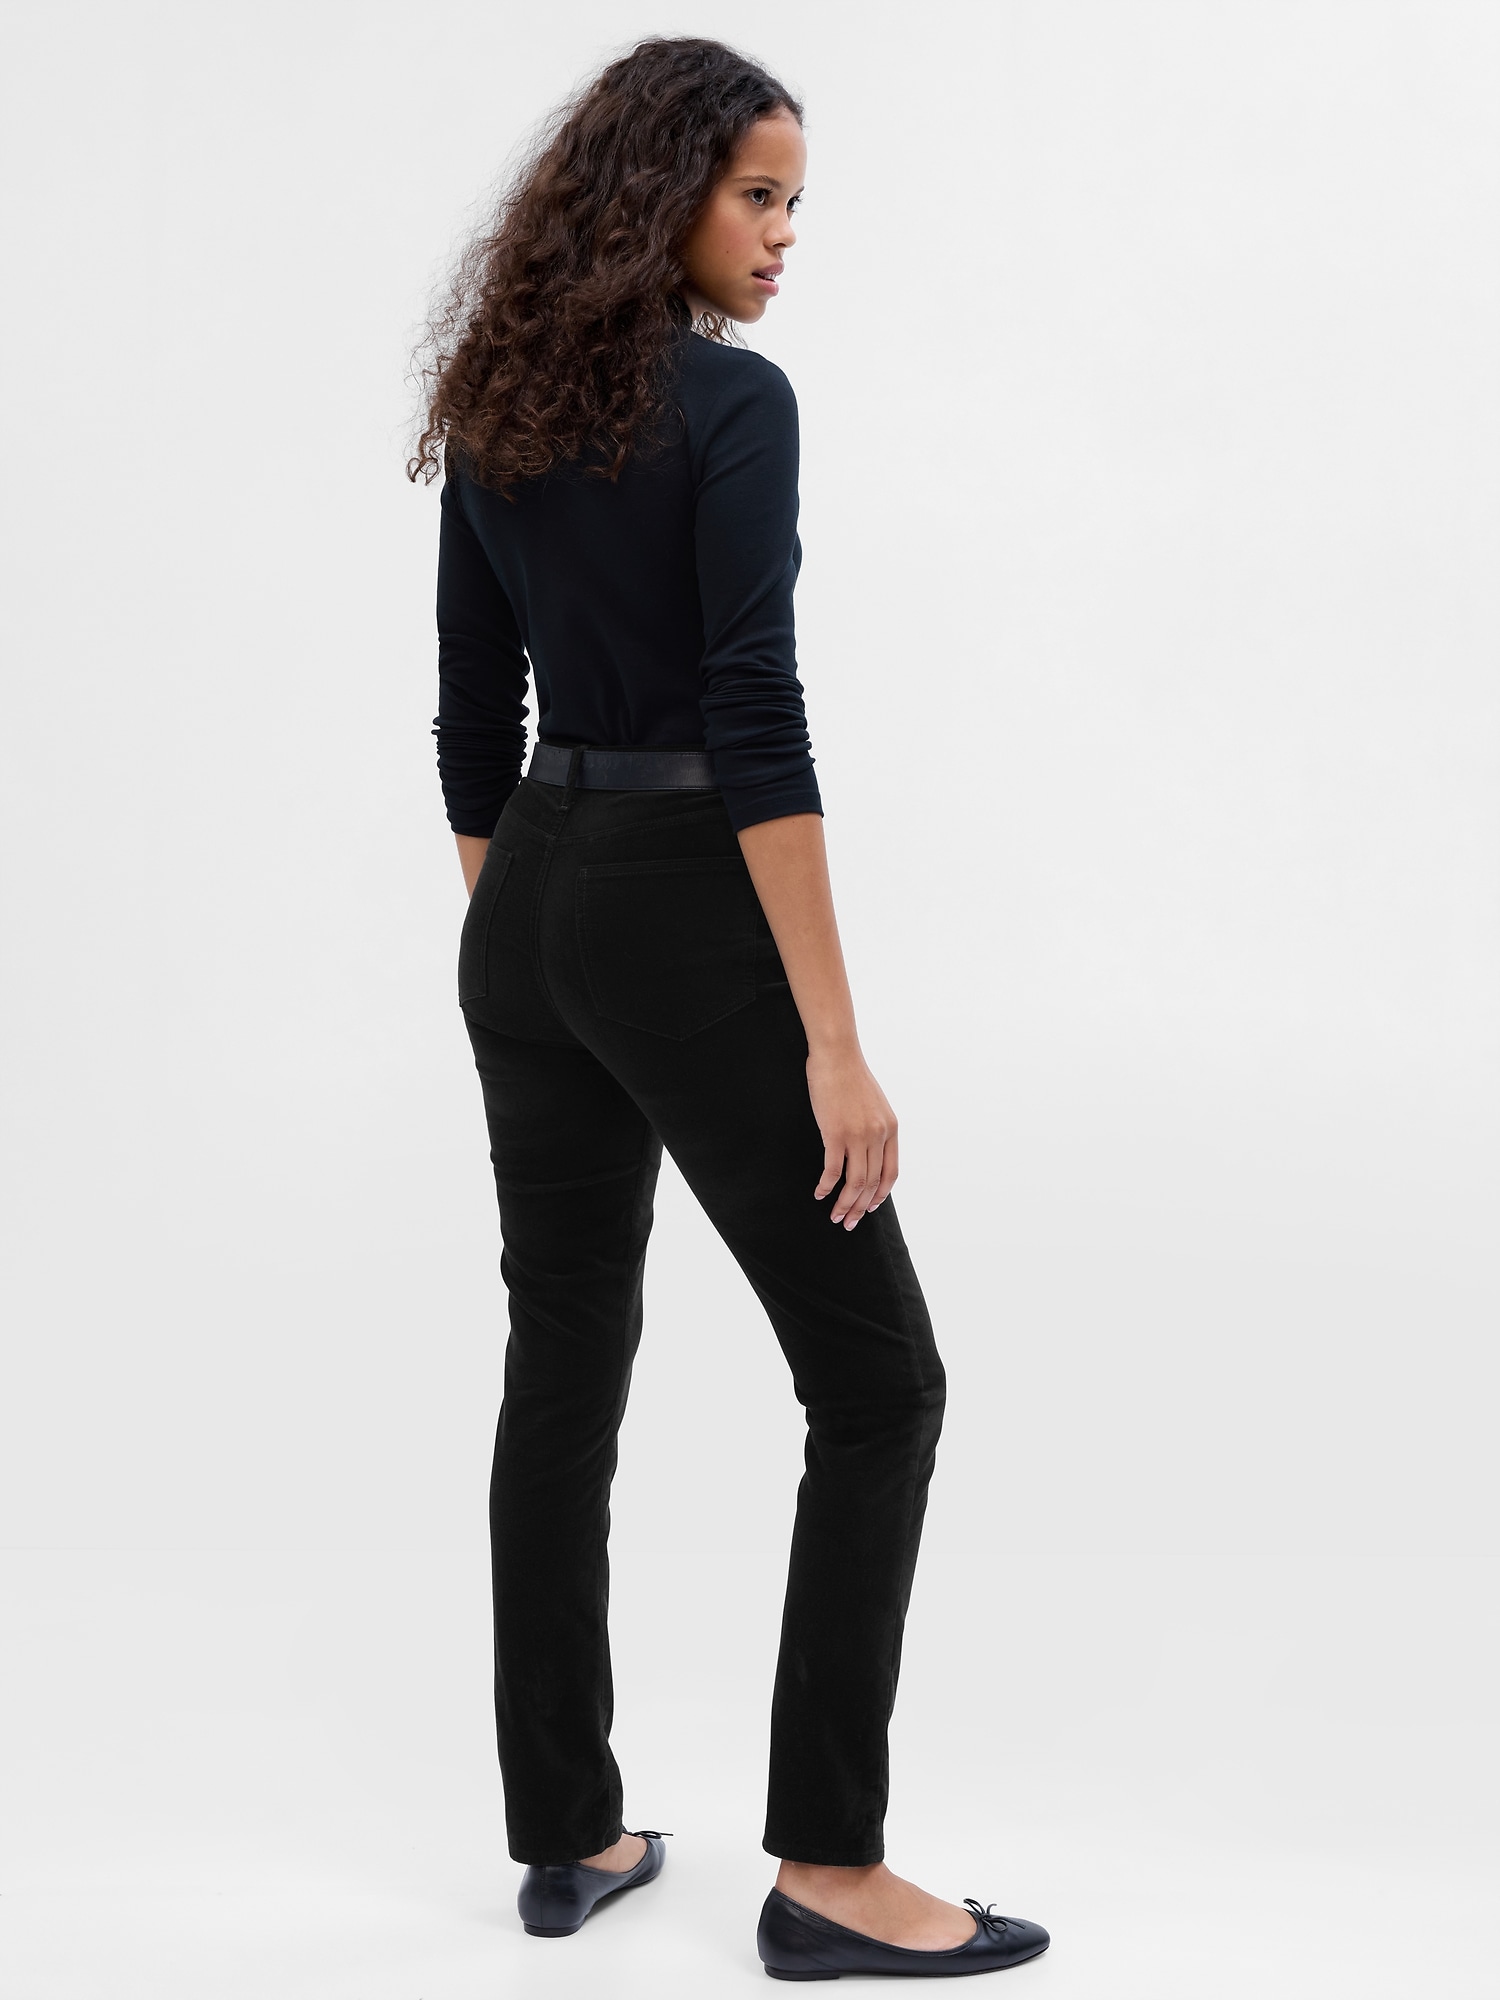 Vintage Black Velvet Pants Size S Women Slack Trousers Fuzzy